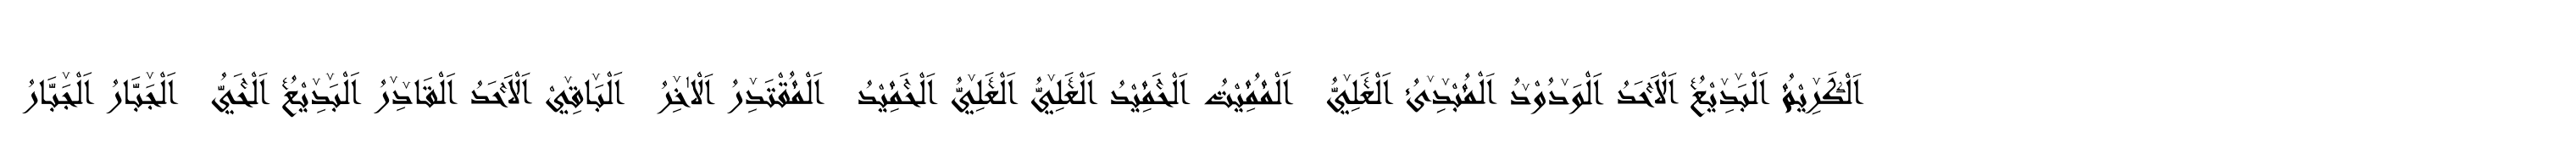 99 Names of ALLAH Linear